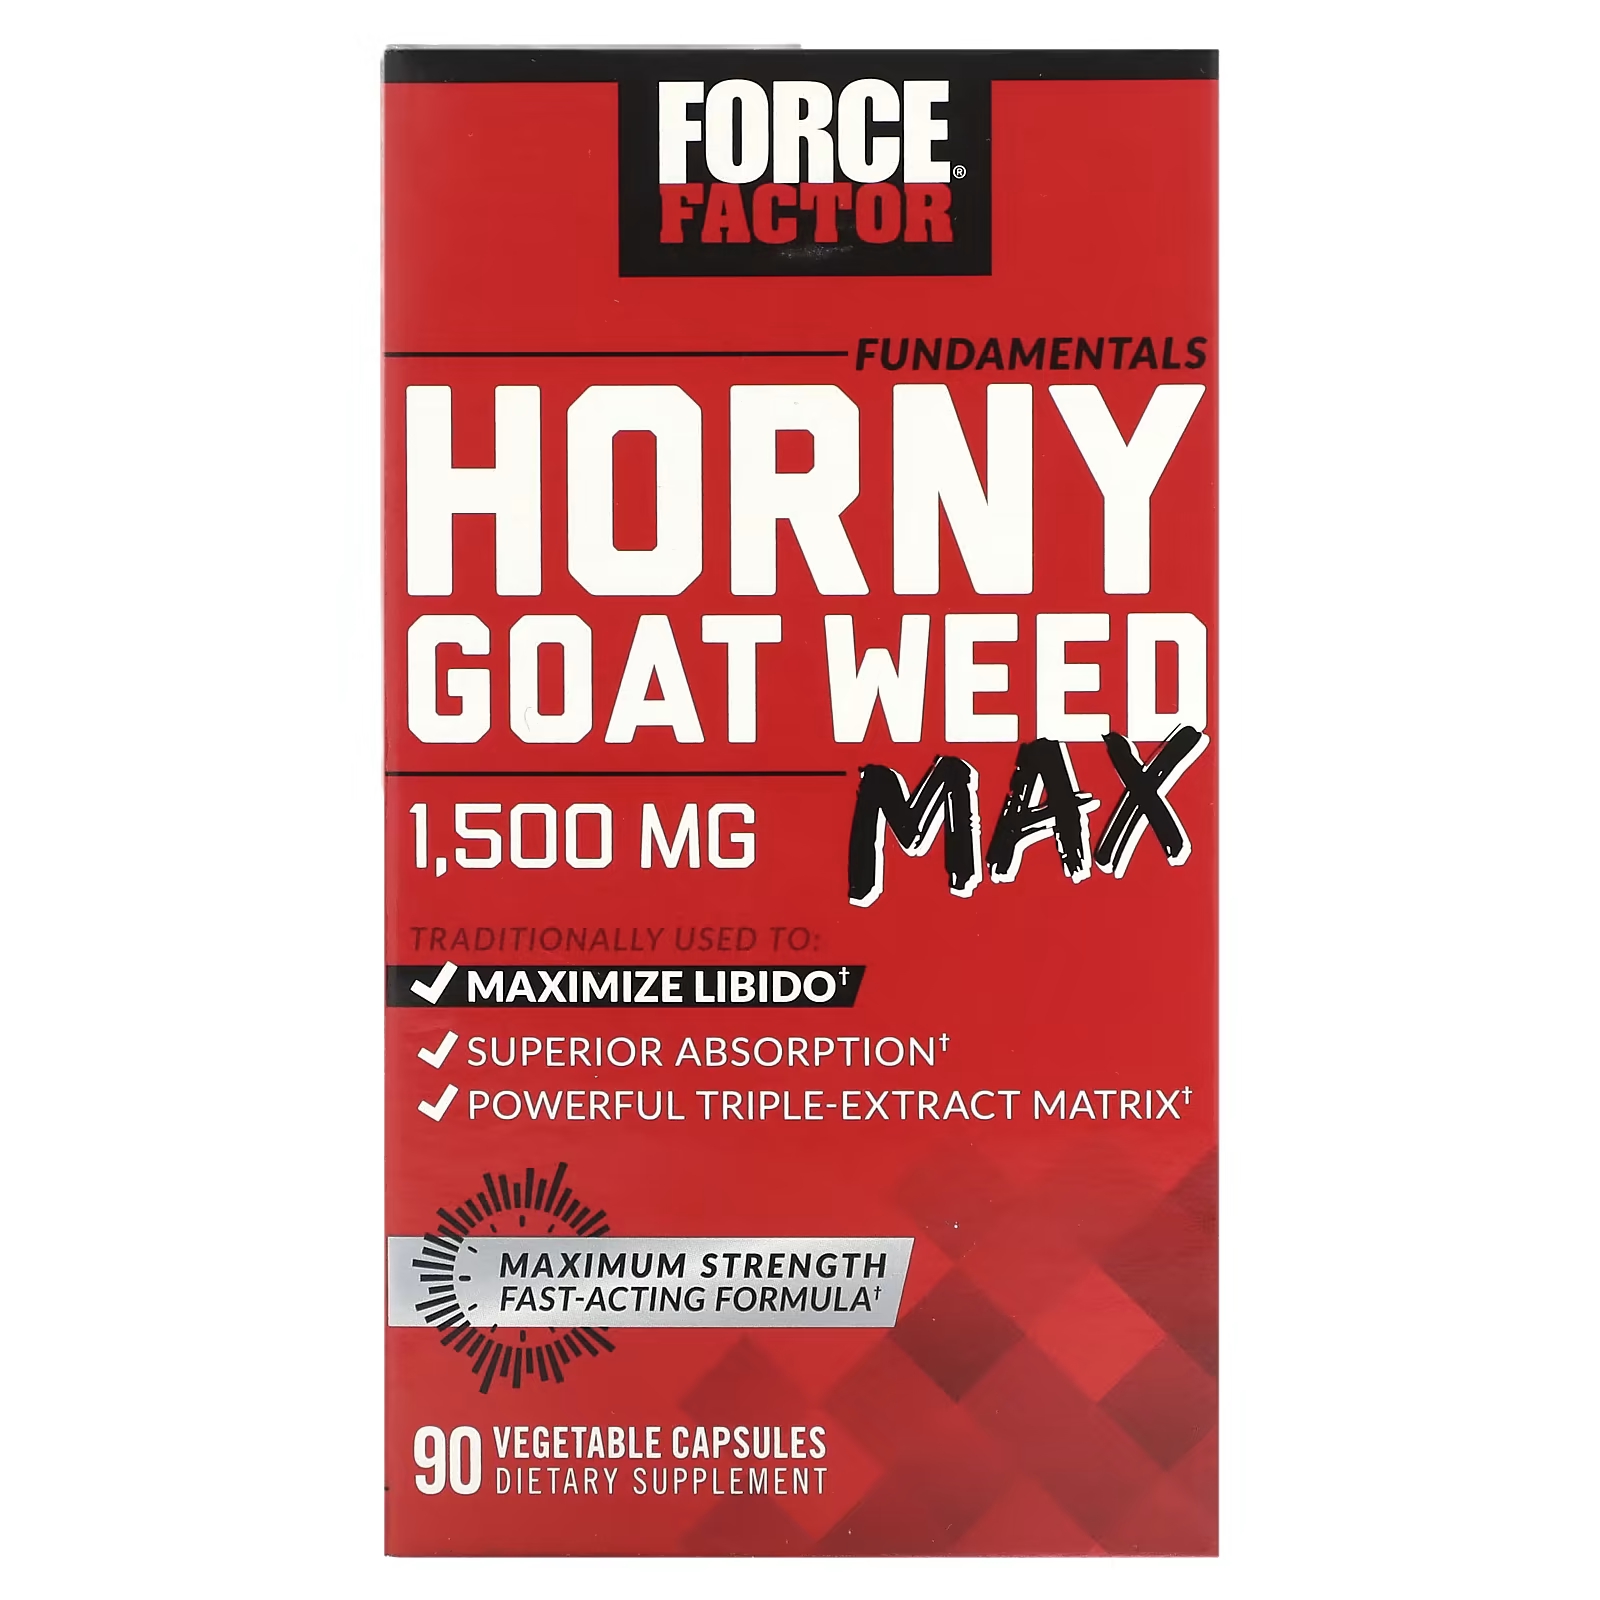 Force Factor Fundamentals Horny Goat Weed Макс. 1500 мг, 90 растительных капсул (500 мг на капсулу) force factor fundamentals horny goat weed маракуйя 90 жевательных таблеток